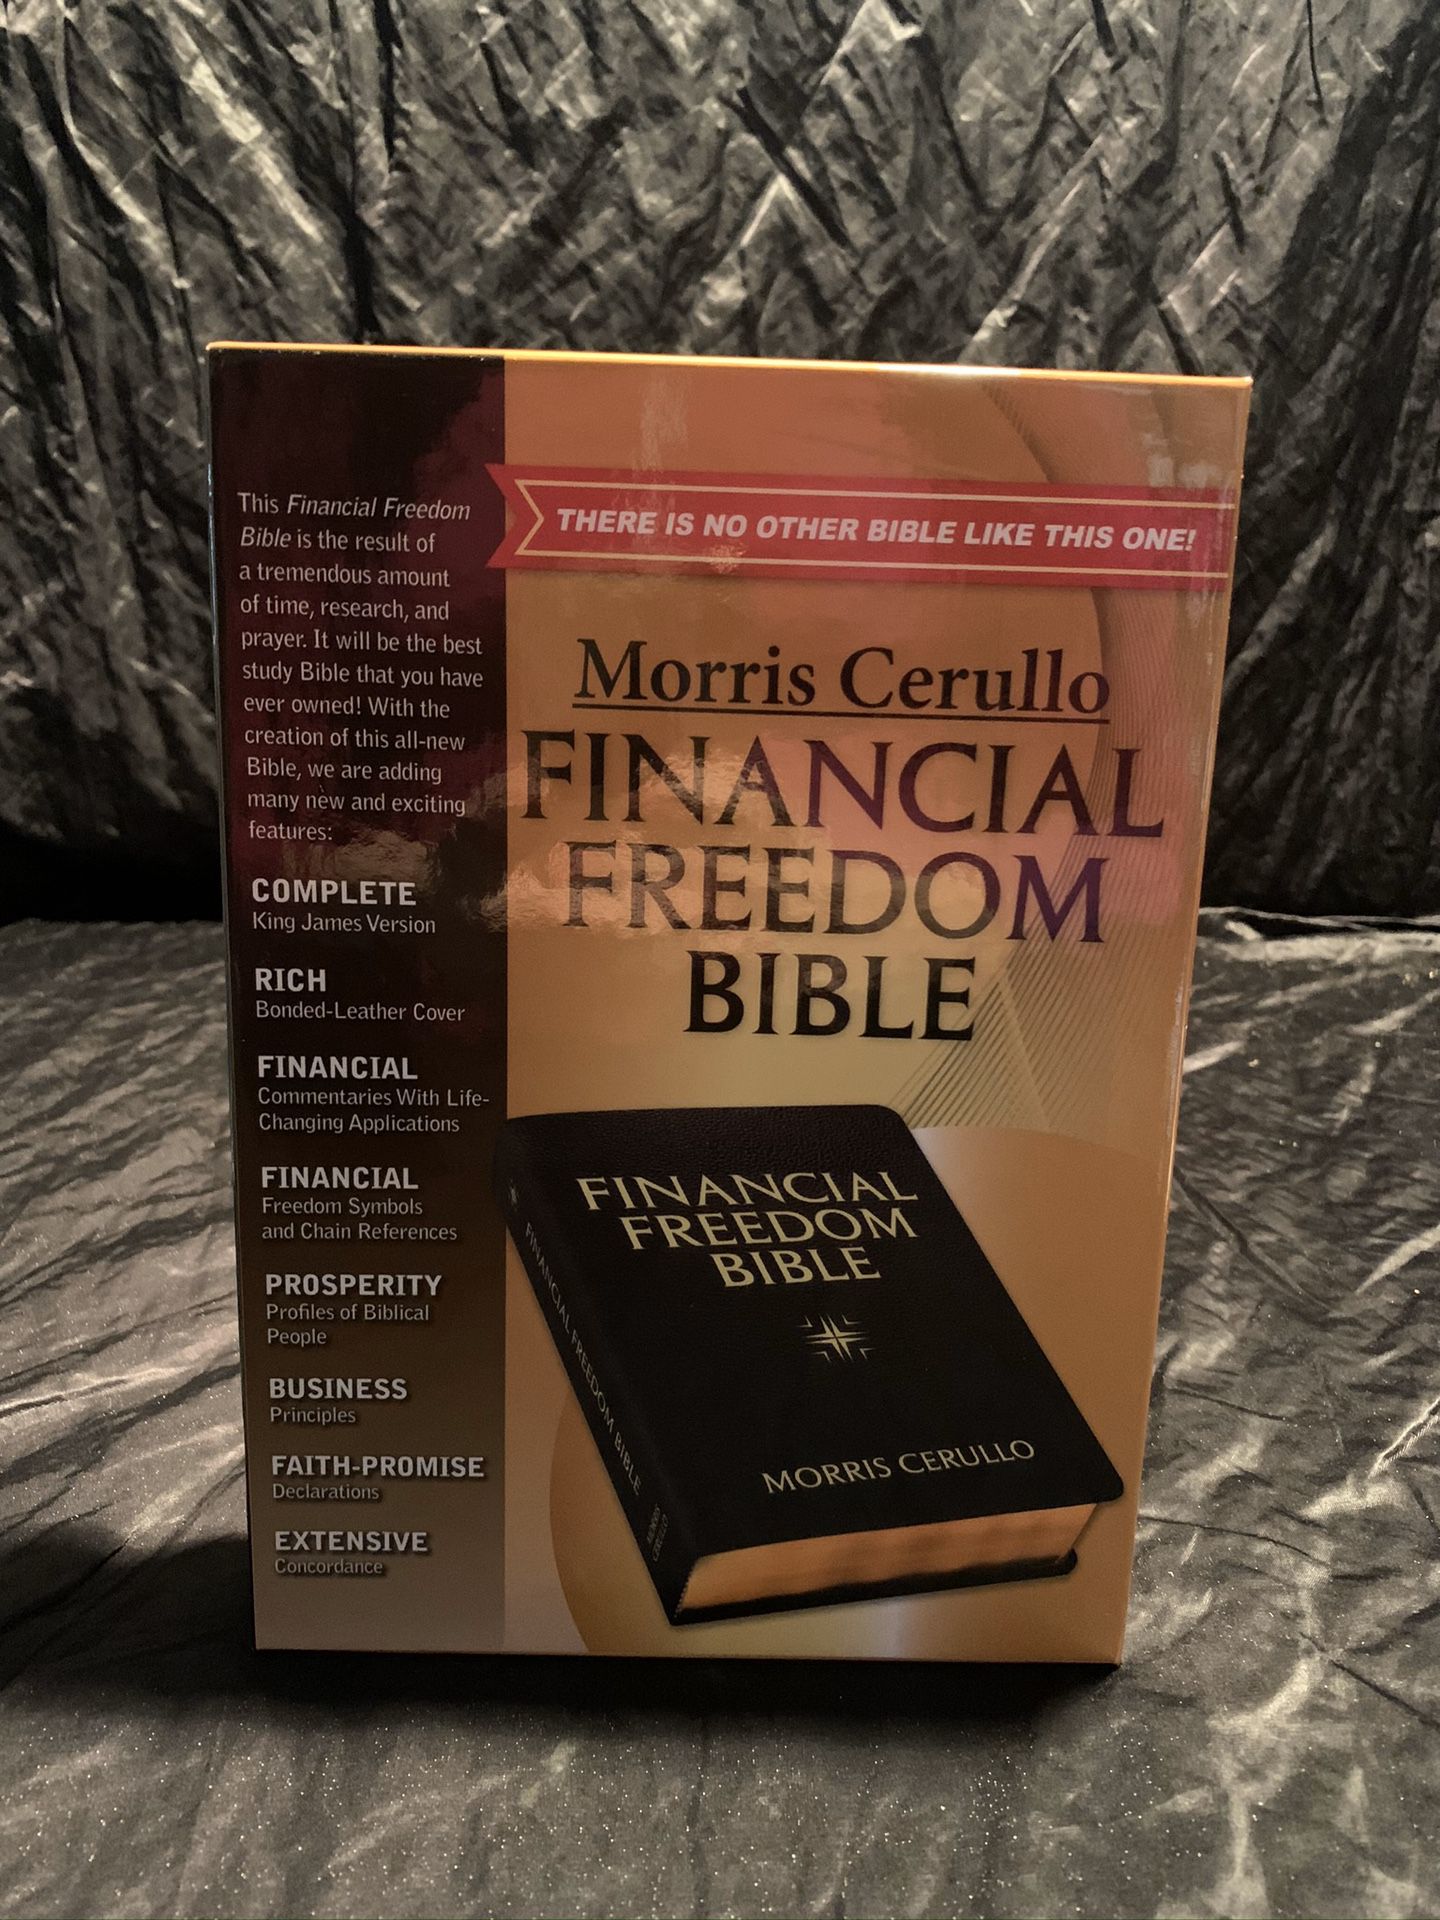 KJV King James Bible Financial Freedom Bible Morris Cerullo